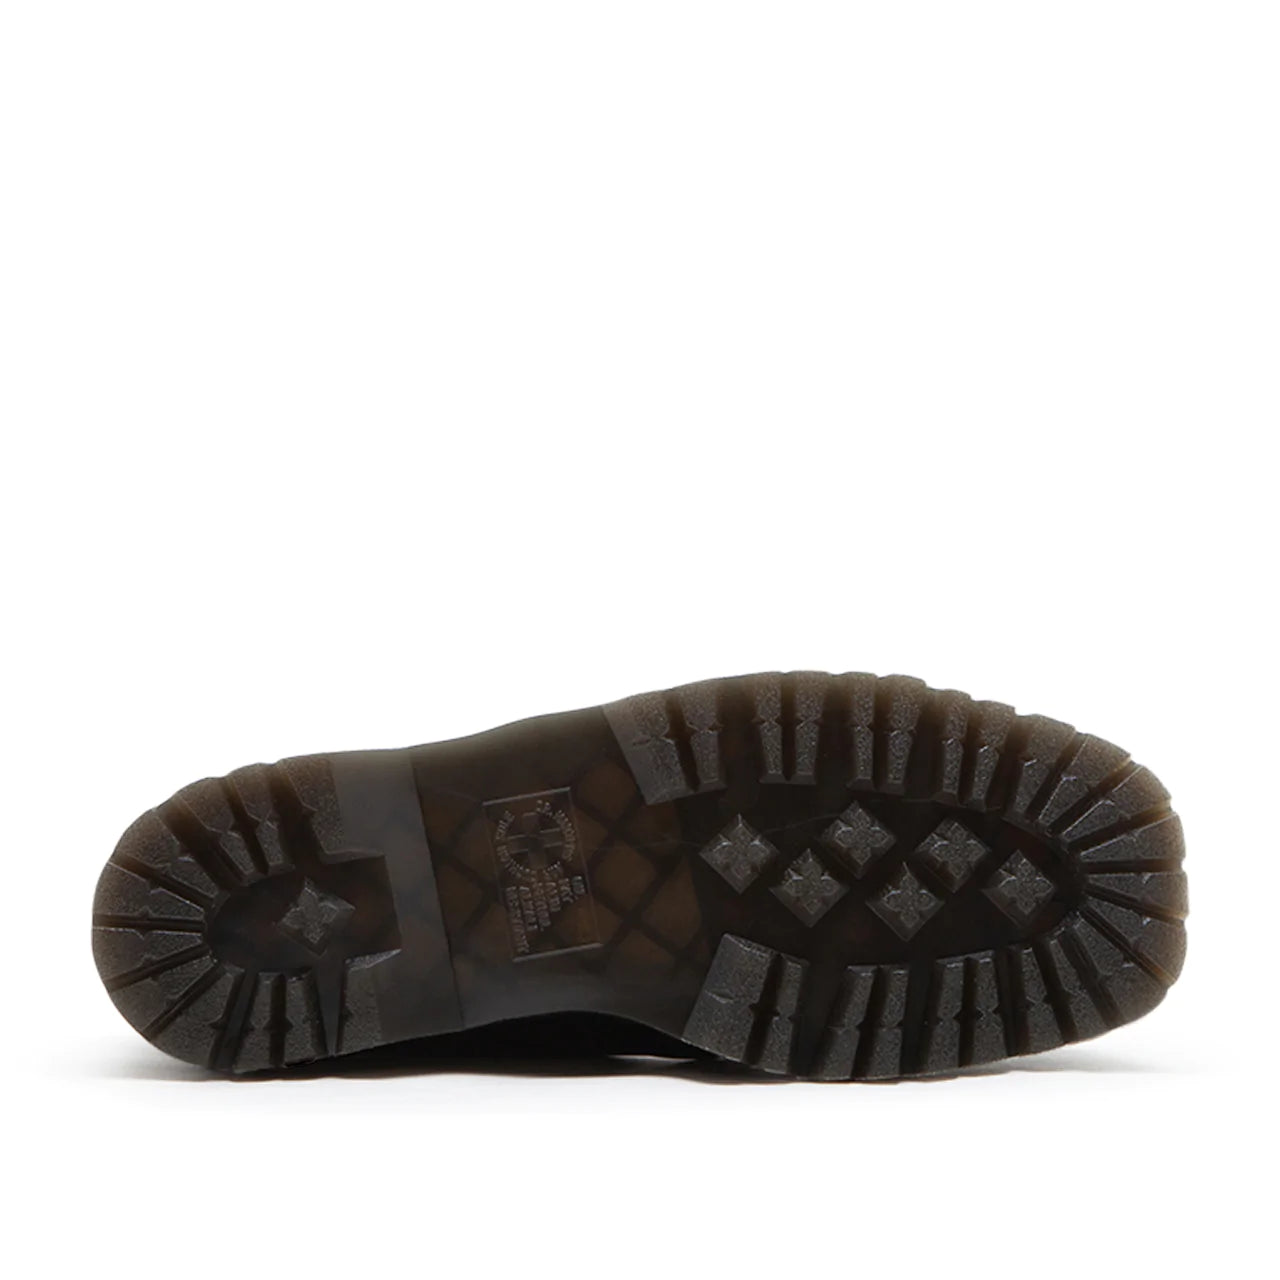 Dr. Martens 1461 Bex Squared Toe Leather Shoes (Schwarz)  - Cheap Juzsports Jordan Outlet